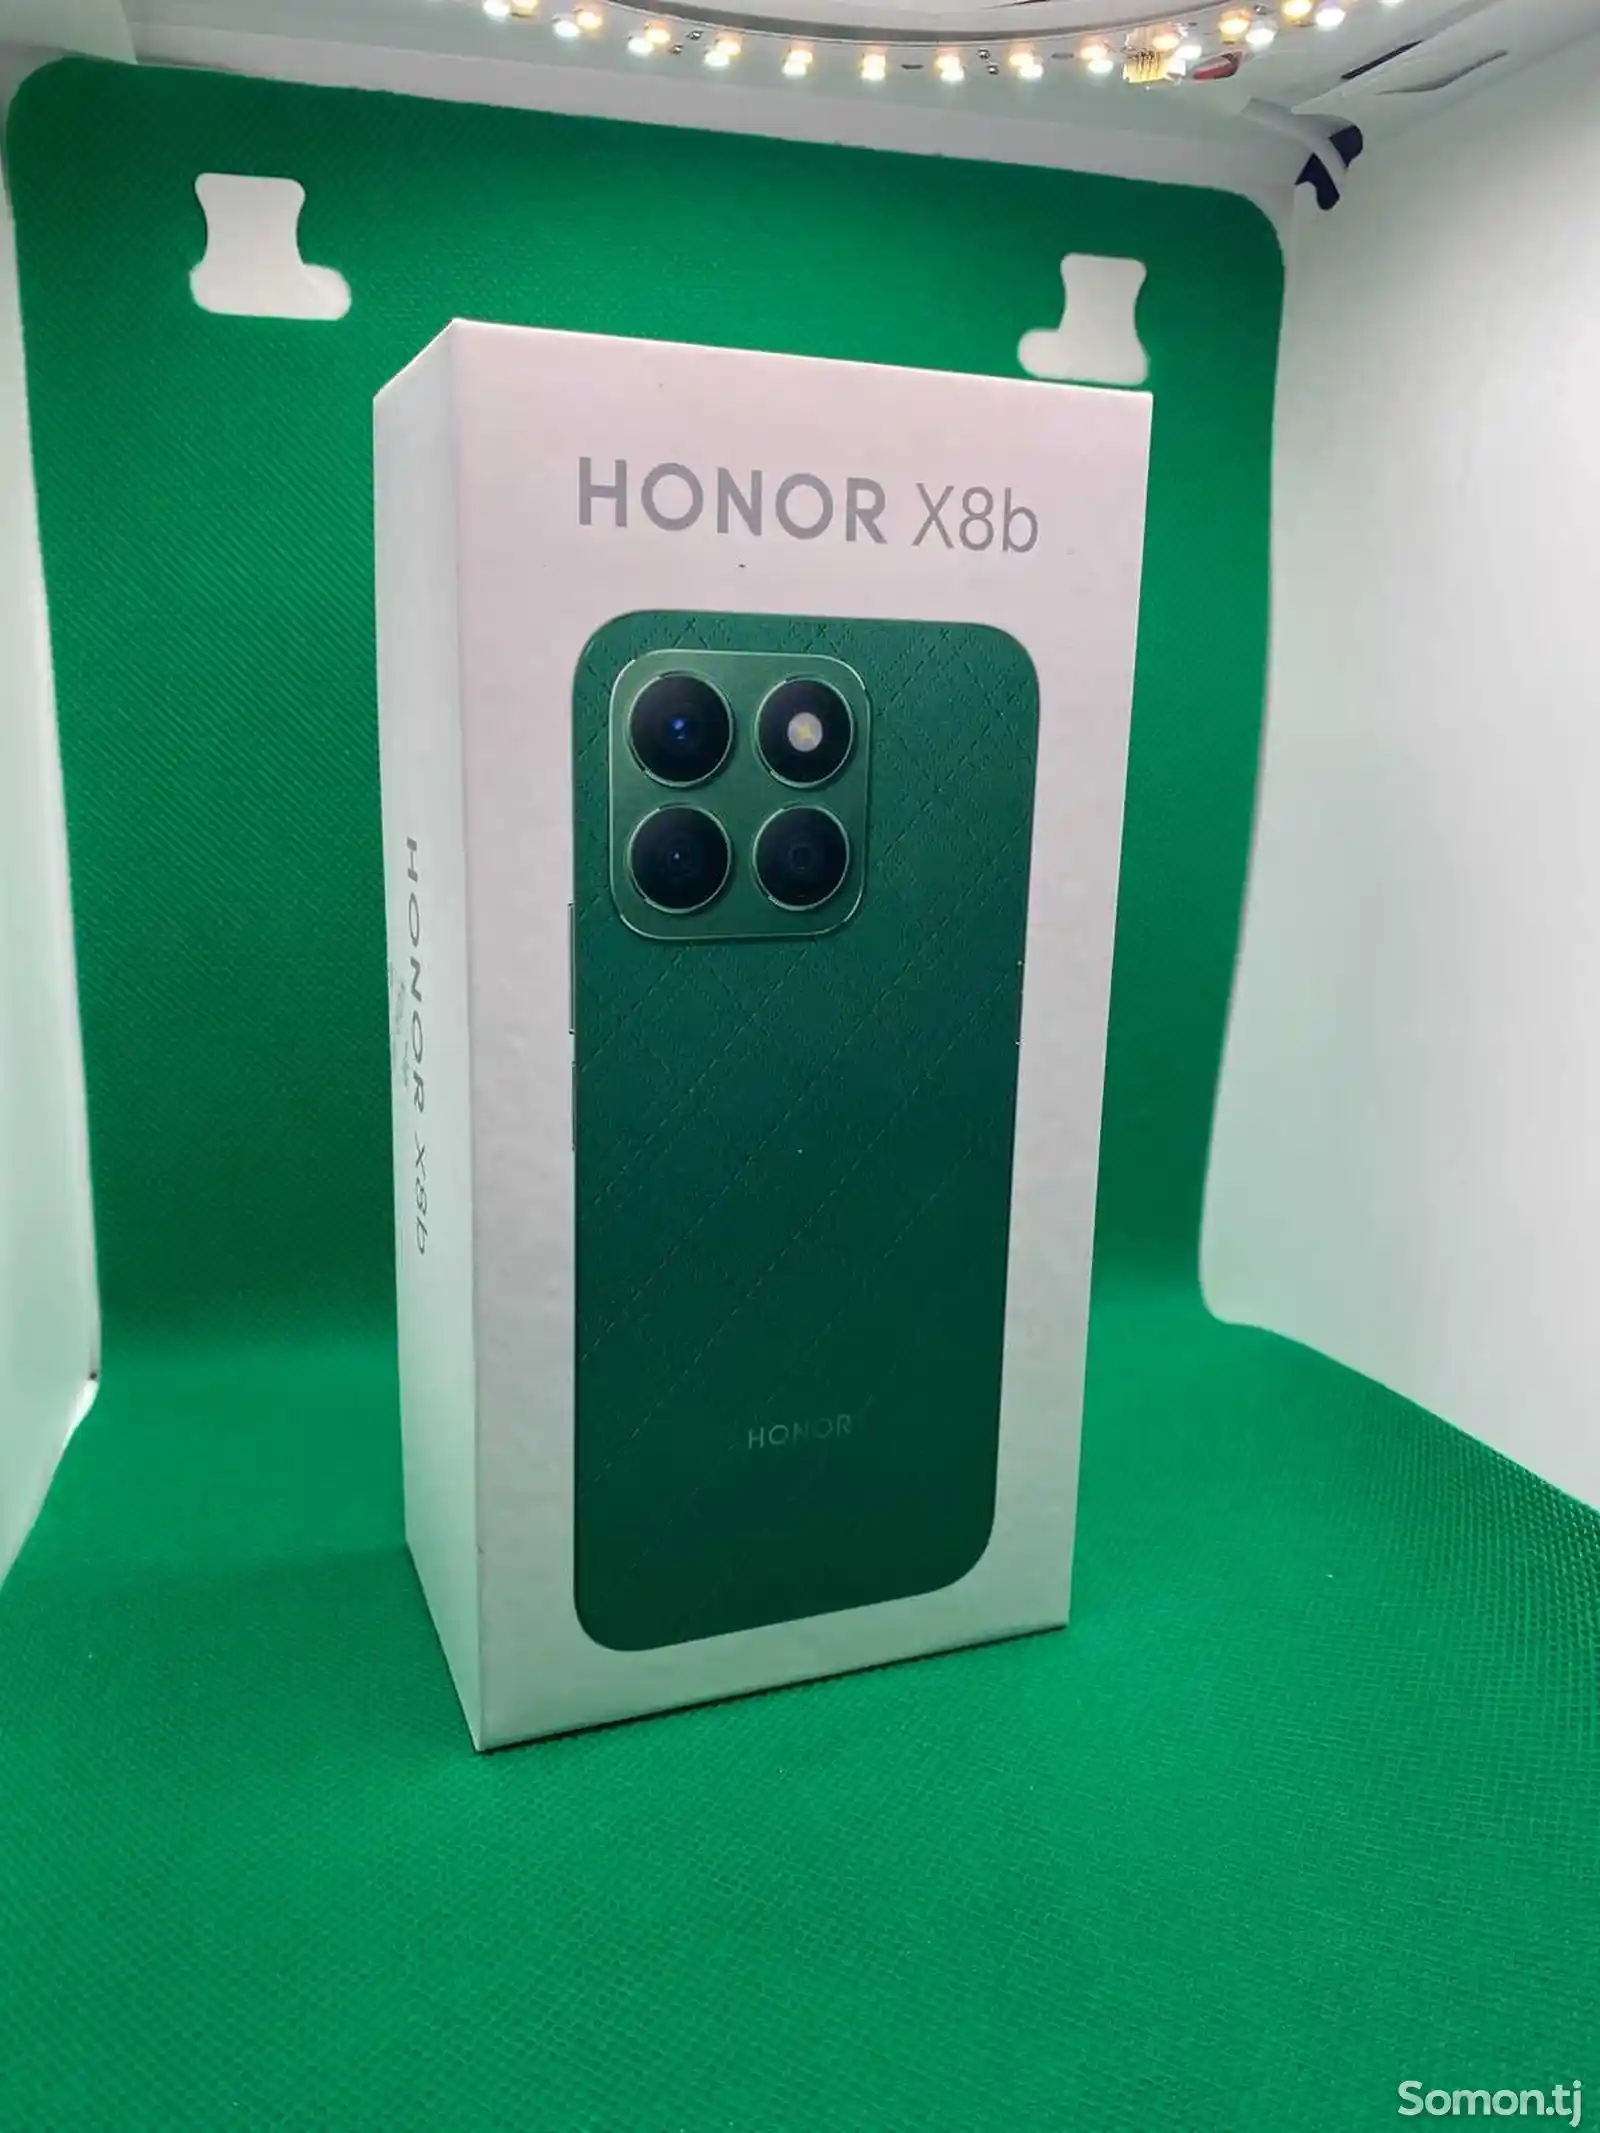 Huawei Honor X8b-1